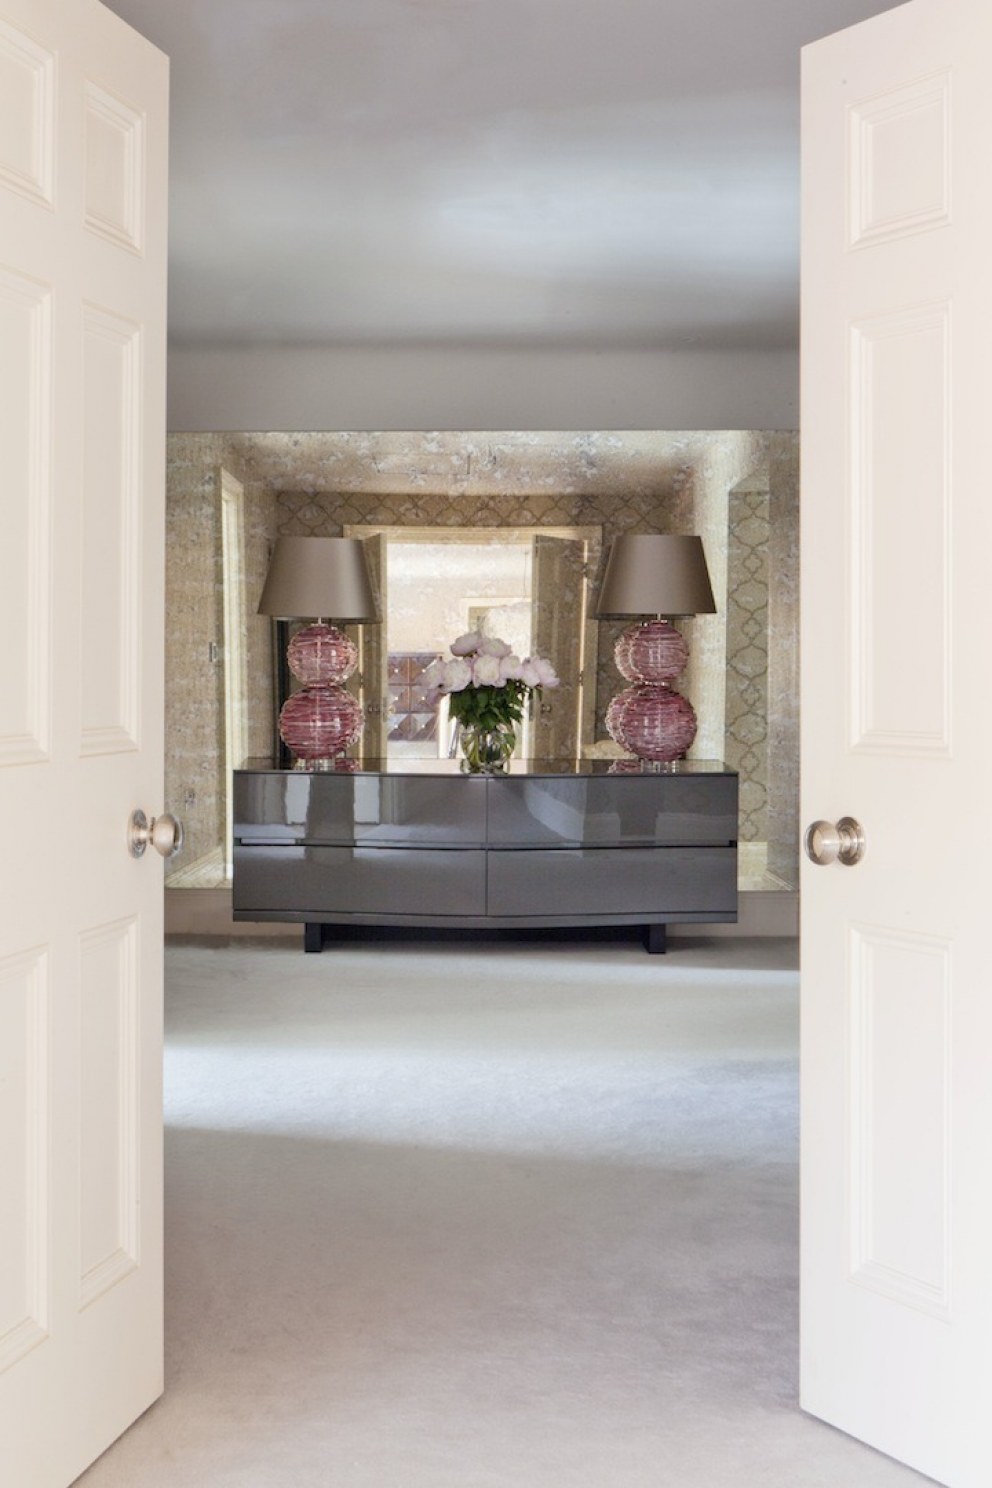 Henley on Thames | Hallway to Master Bedroom Suite | Interior Designers